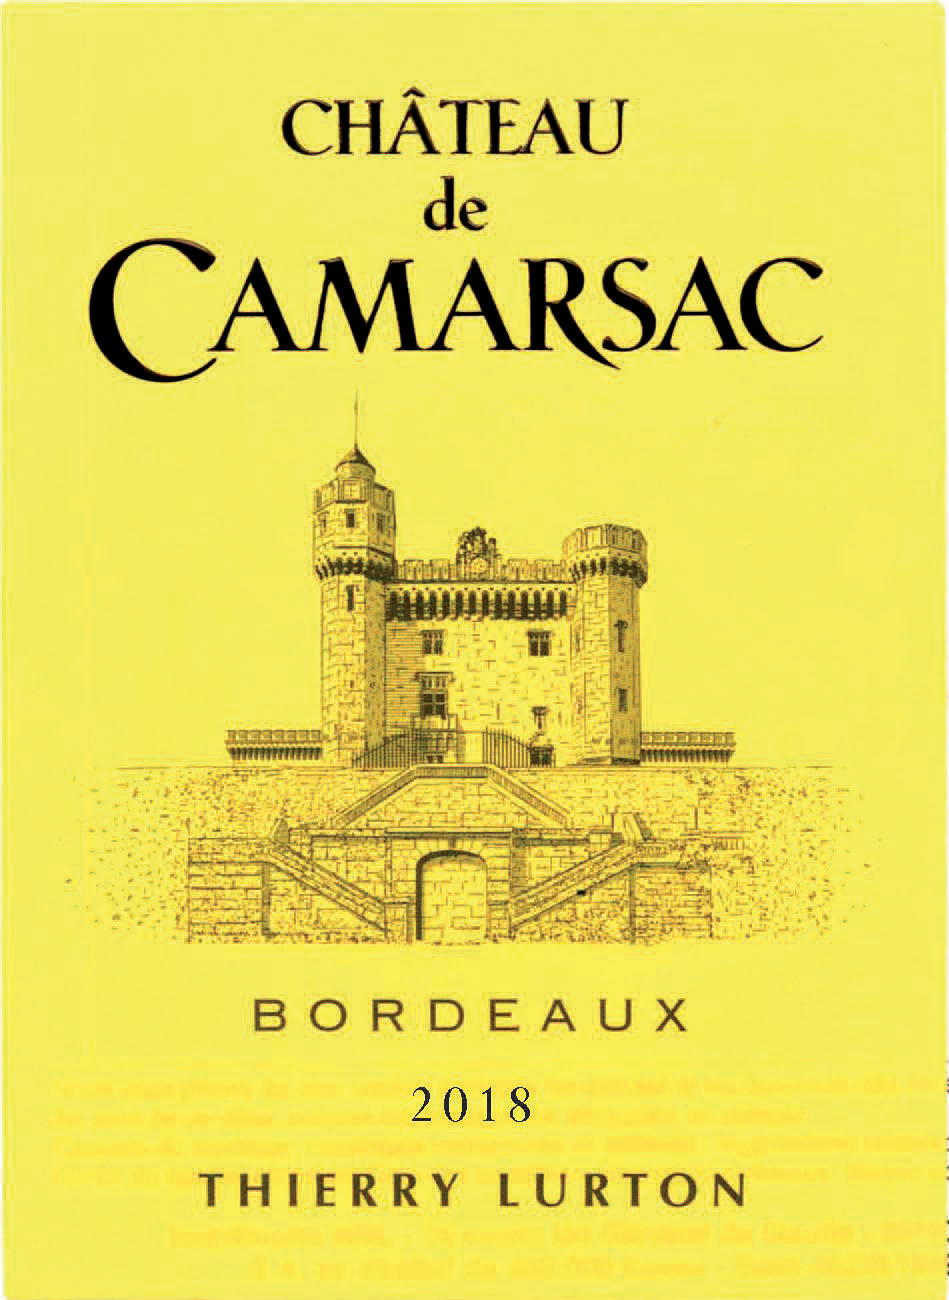 Chateau de Camarsac label